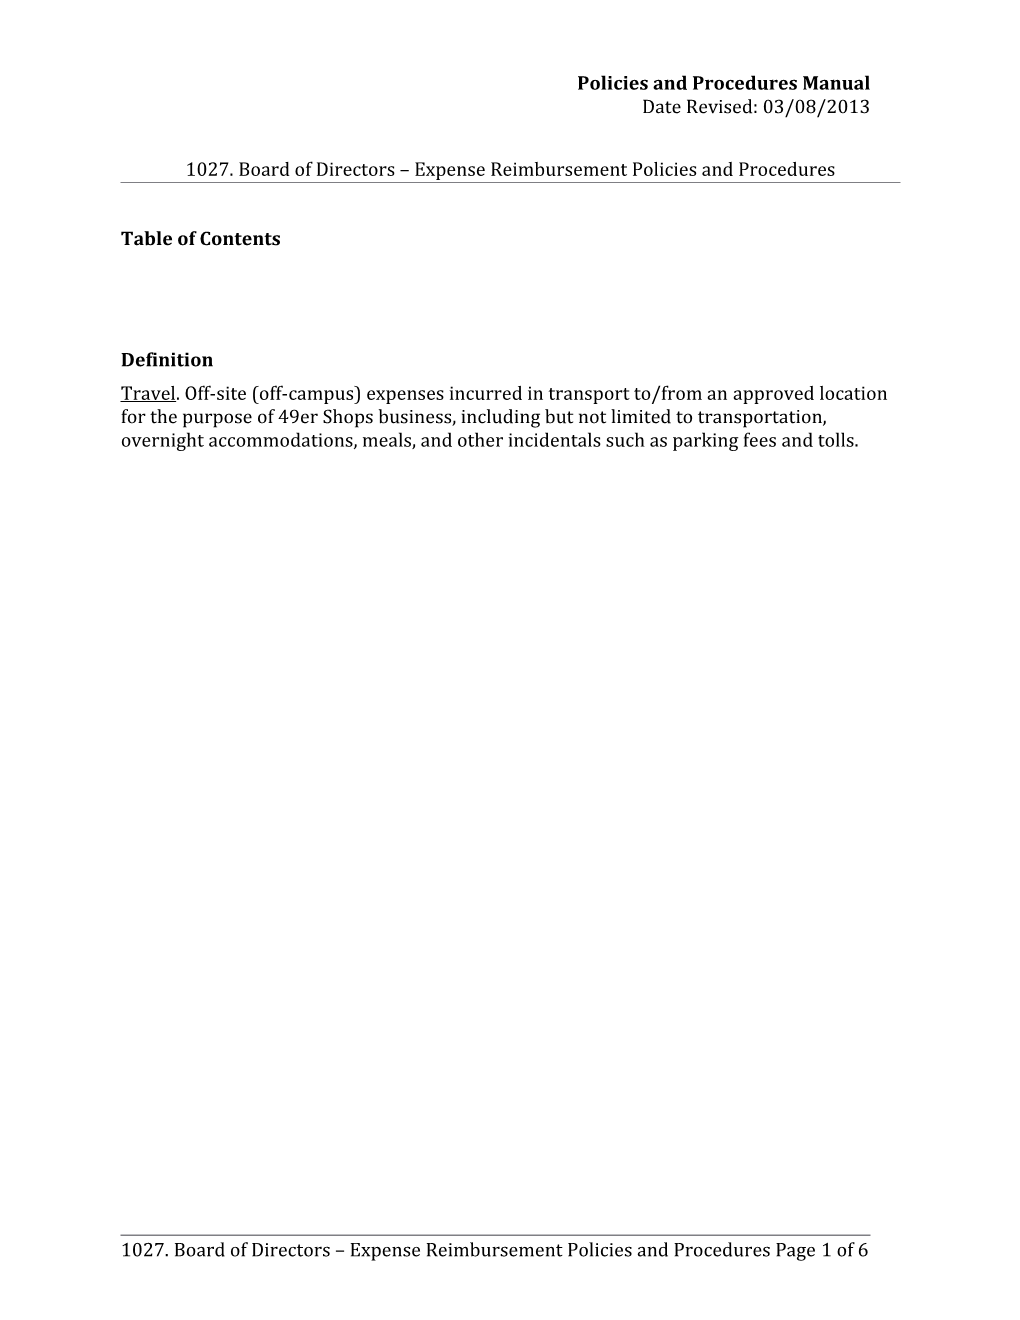 1027. Board of Directors Expense Reimbursement Policies and Procedures